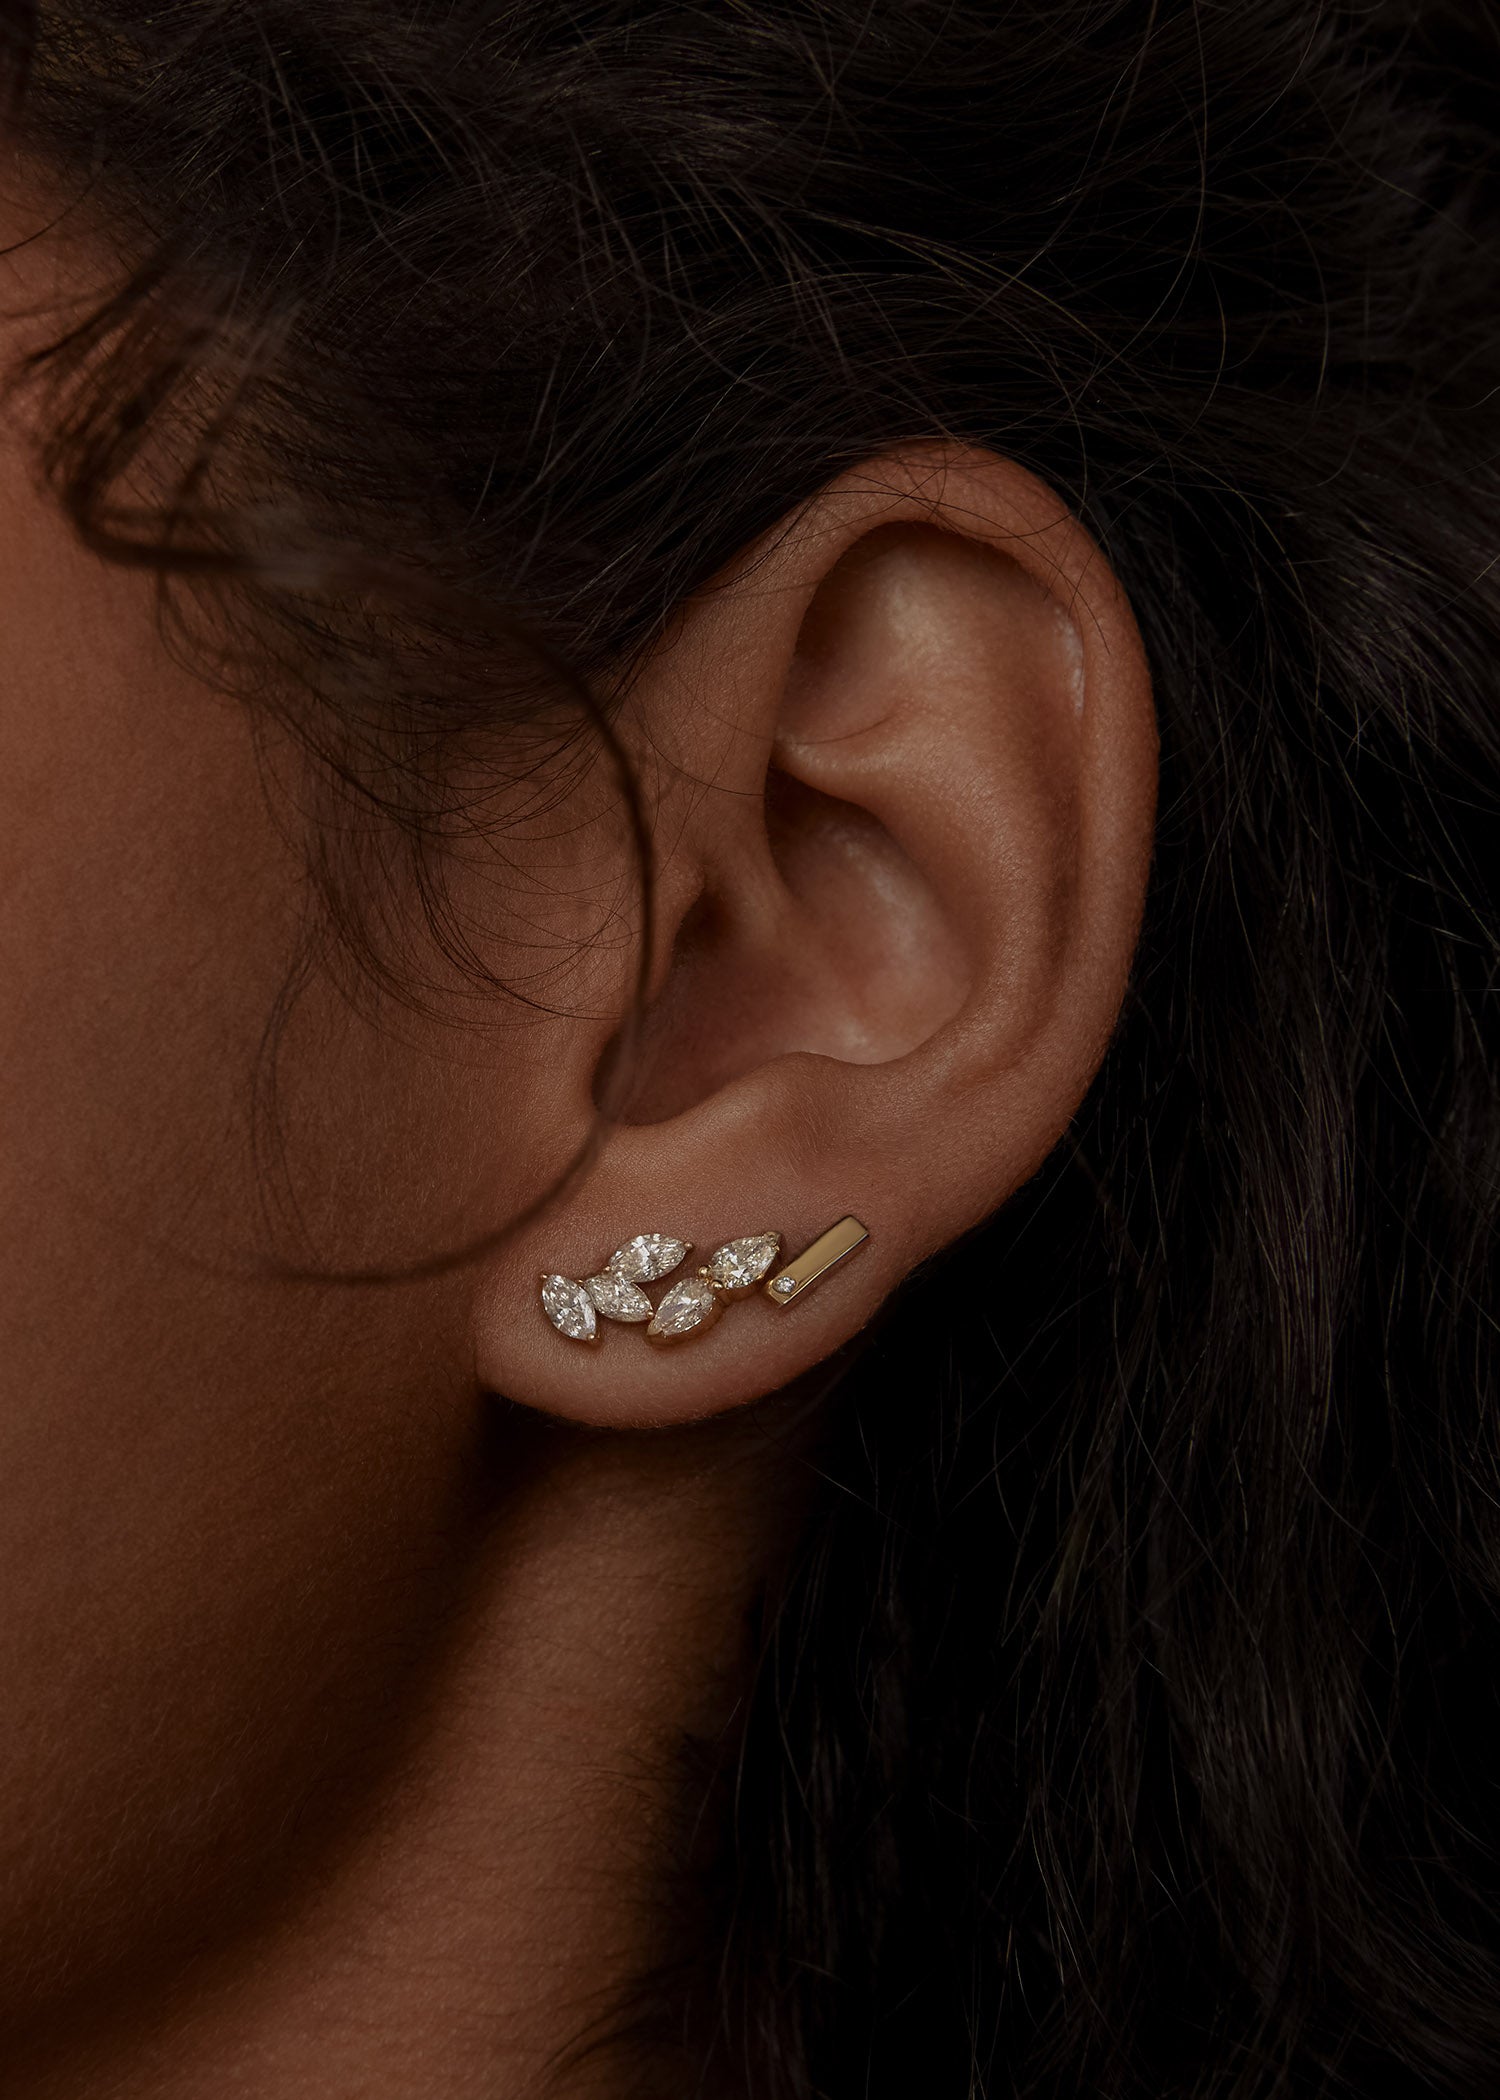 alt="Pear Diamond Angel Stud Earrings"